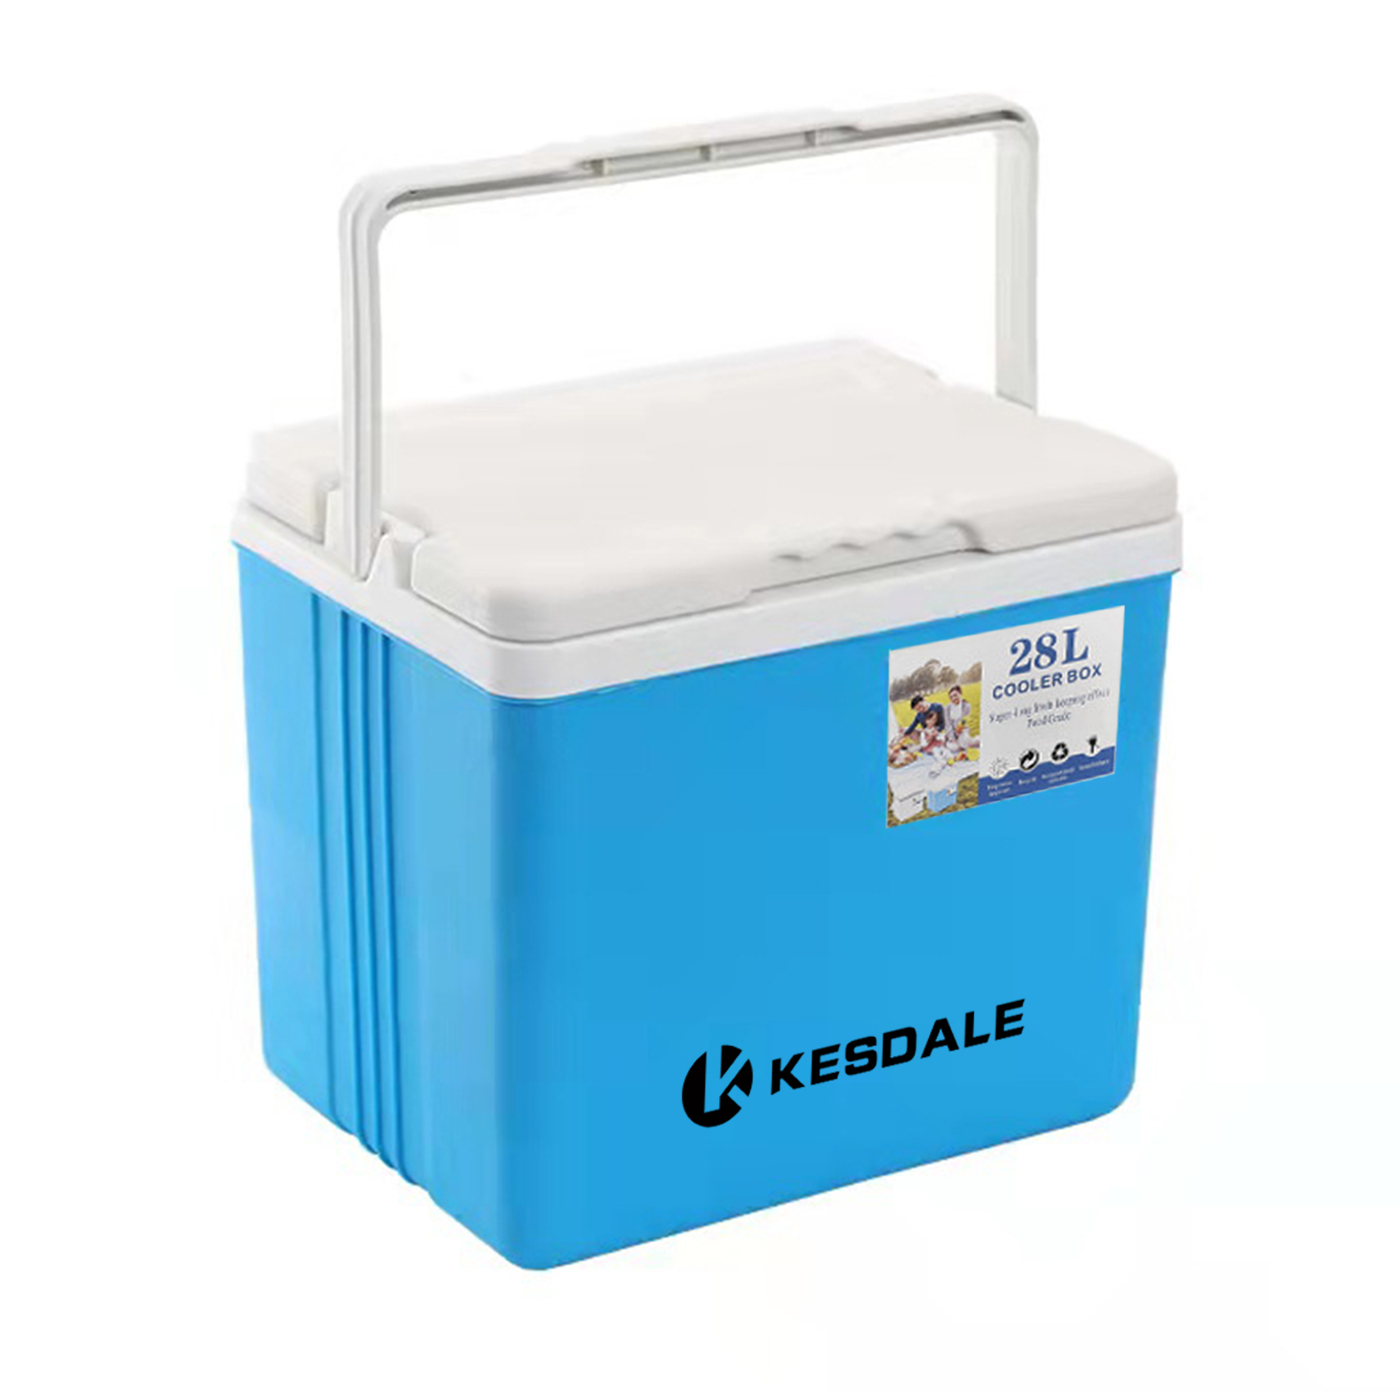 28L Plastic Insulated Ice Cooler Box